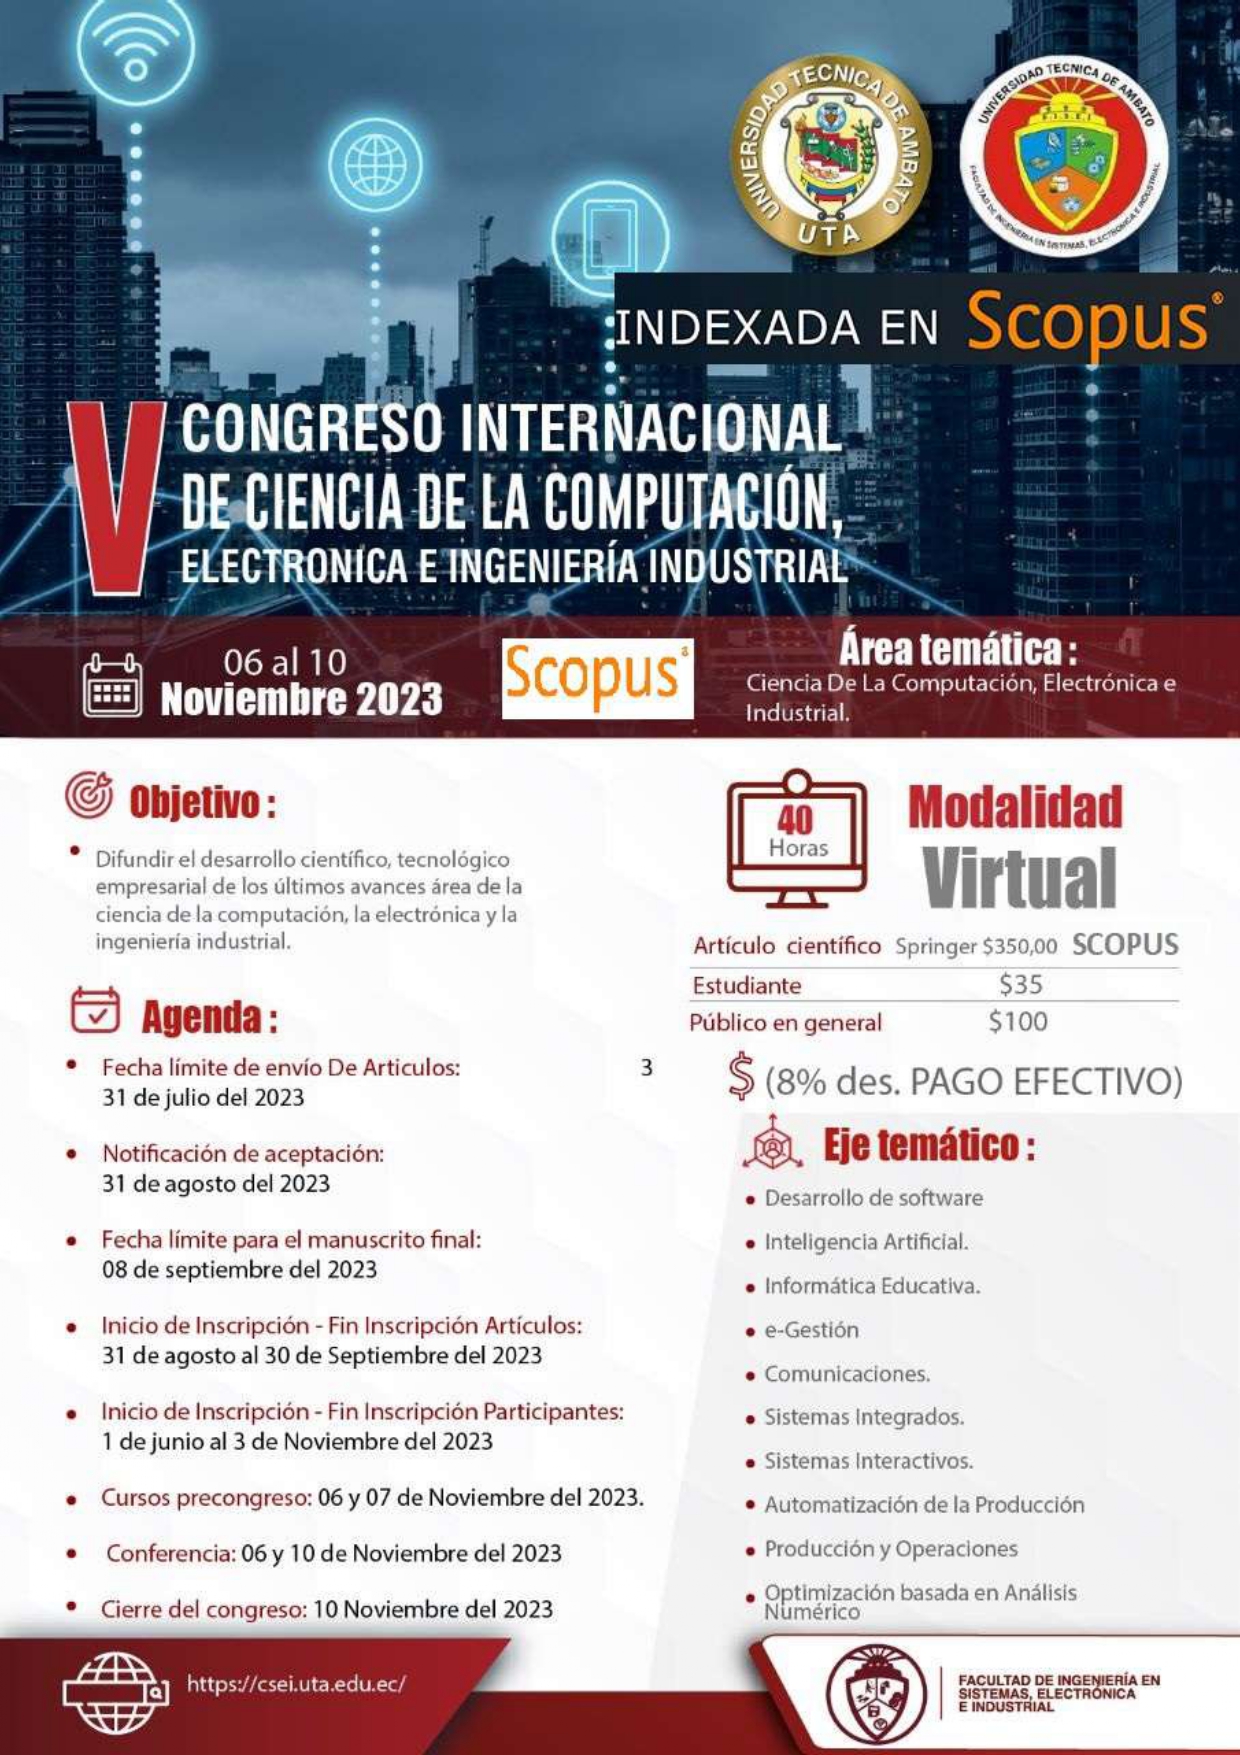 V Congreso Internacional de Informática, Electrónica e Ingeniería Industrial